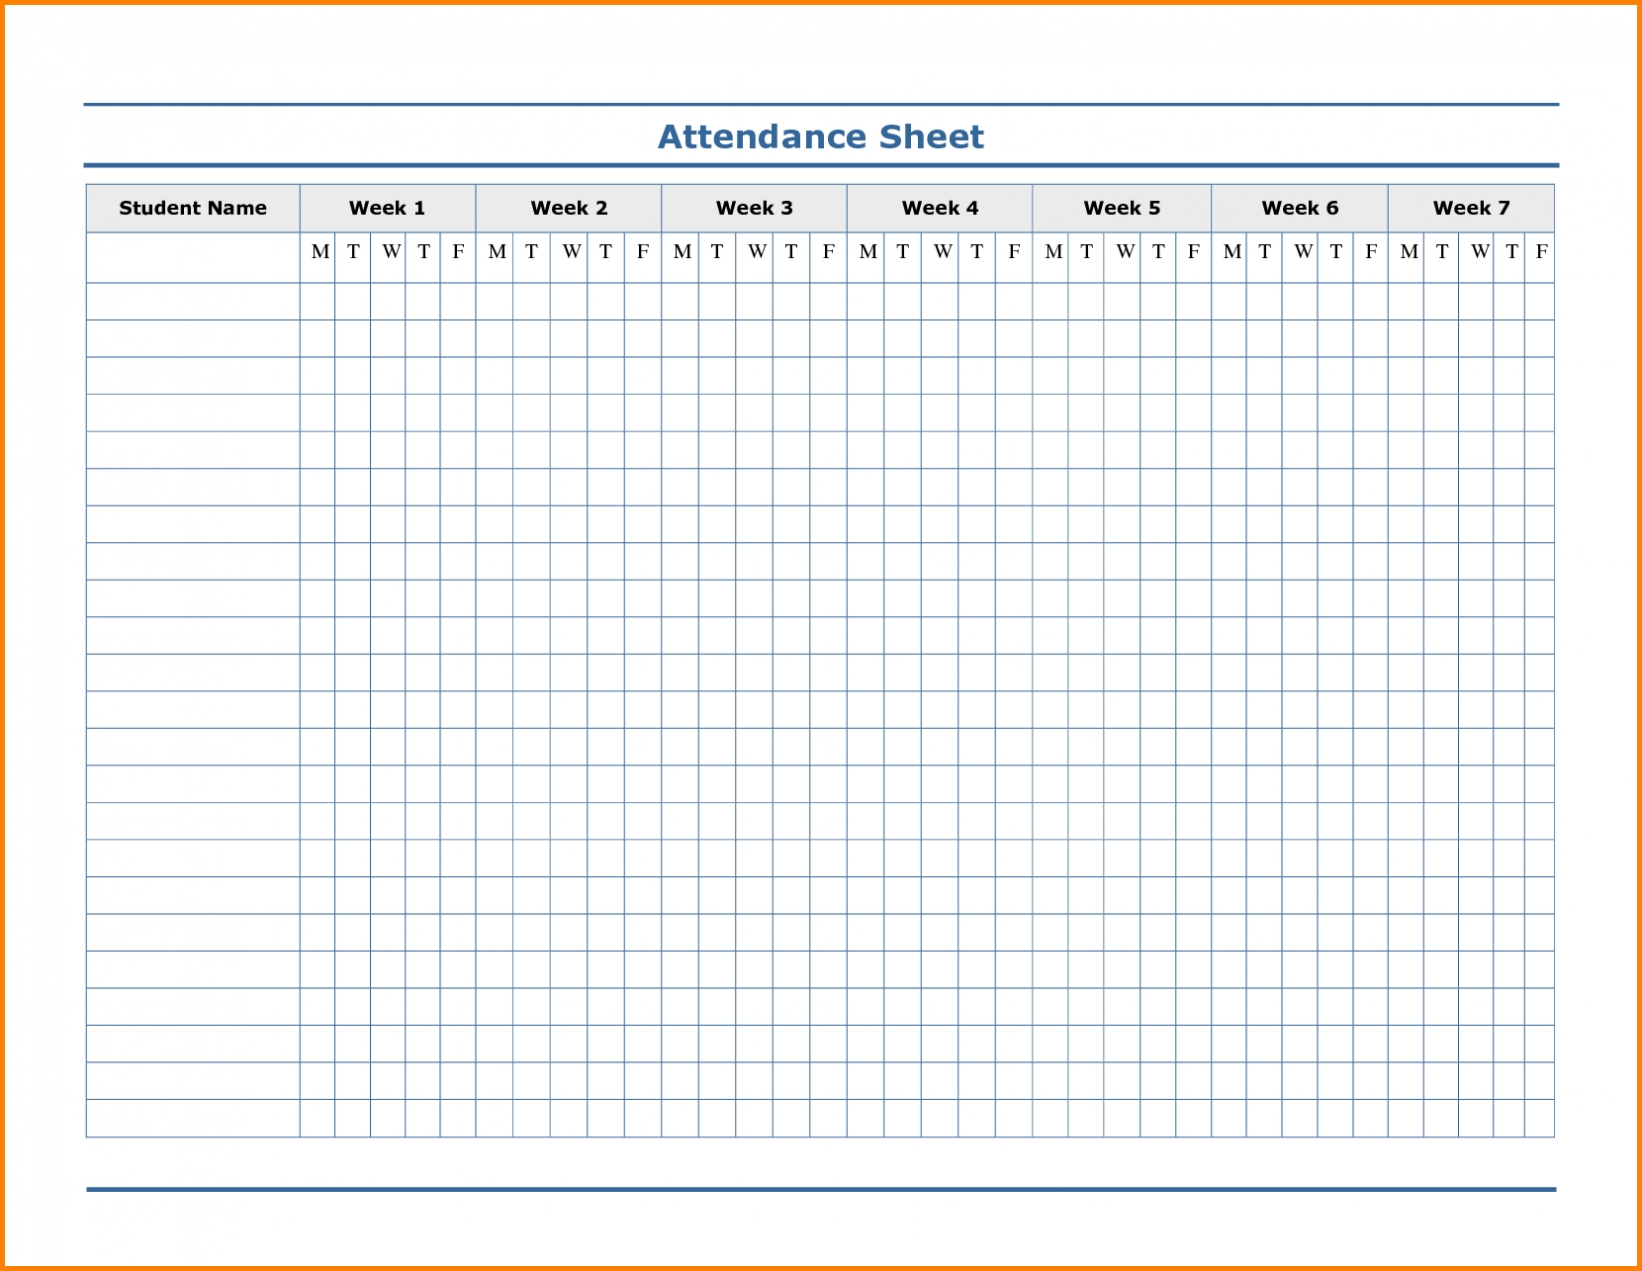 Free Printable Employee Attendance Sheet Pdf, Word, Excel  2020 Employee Attendance Calendar Pdf